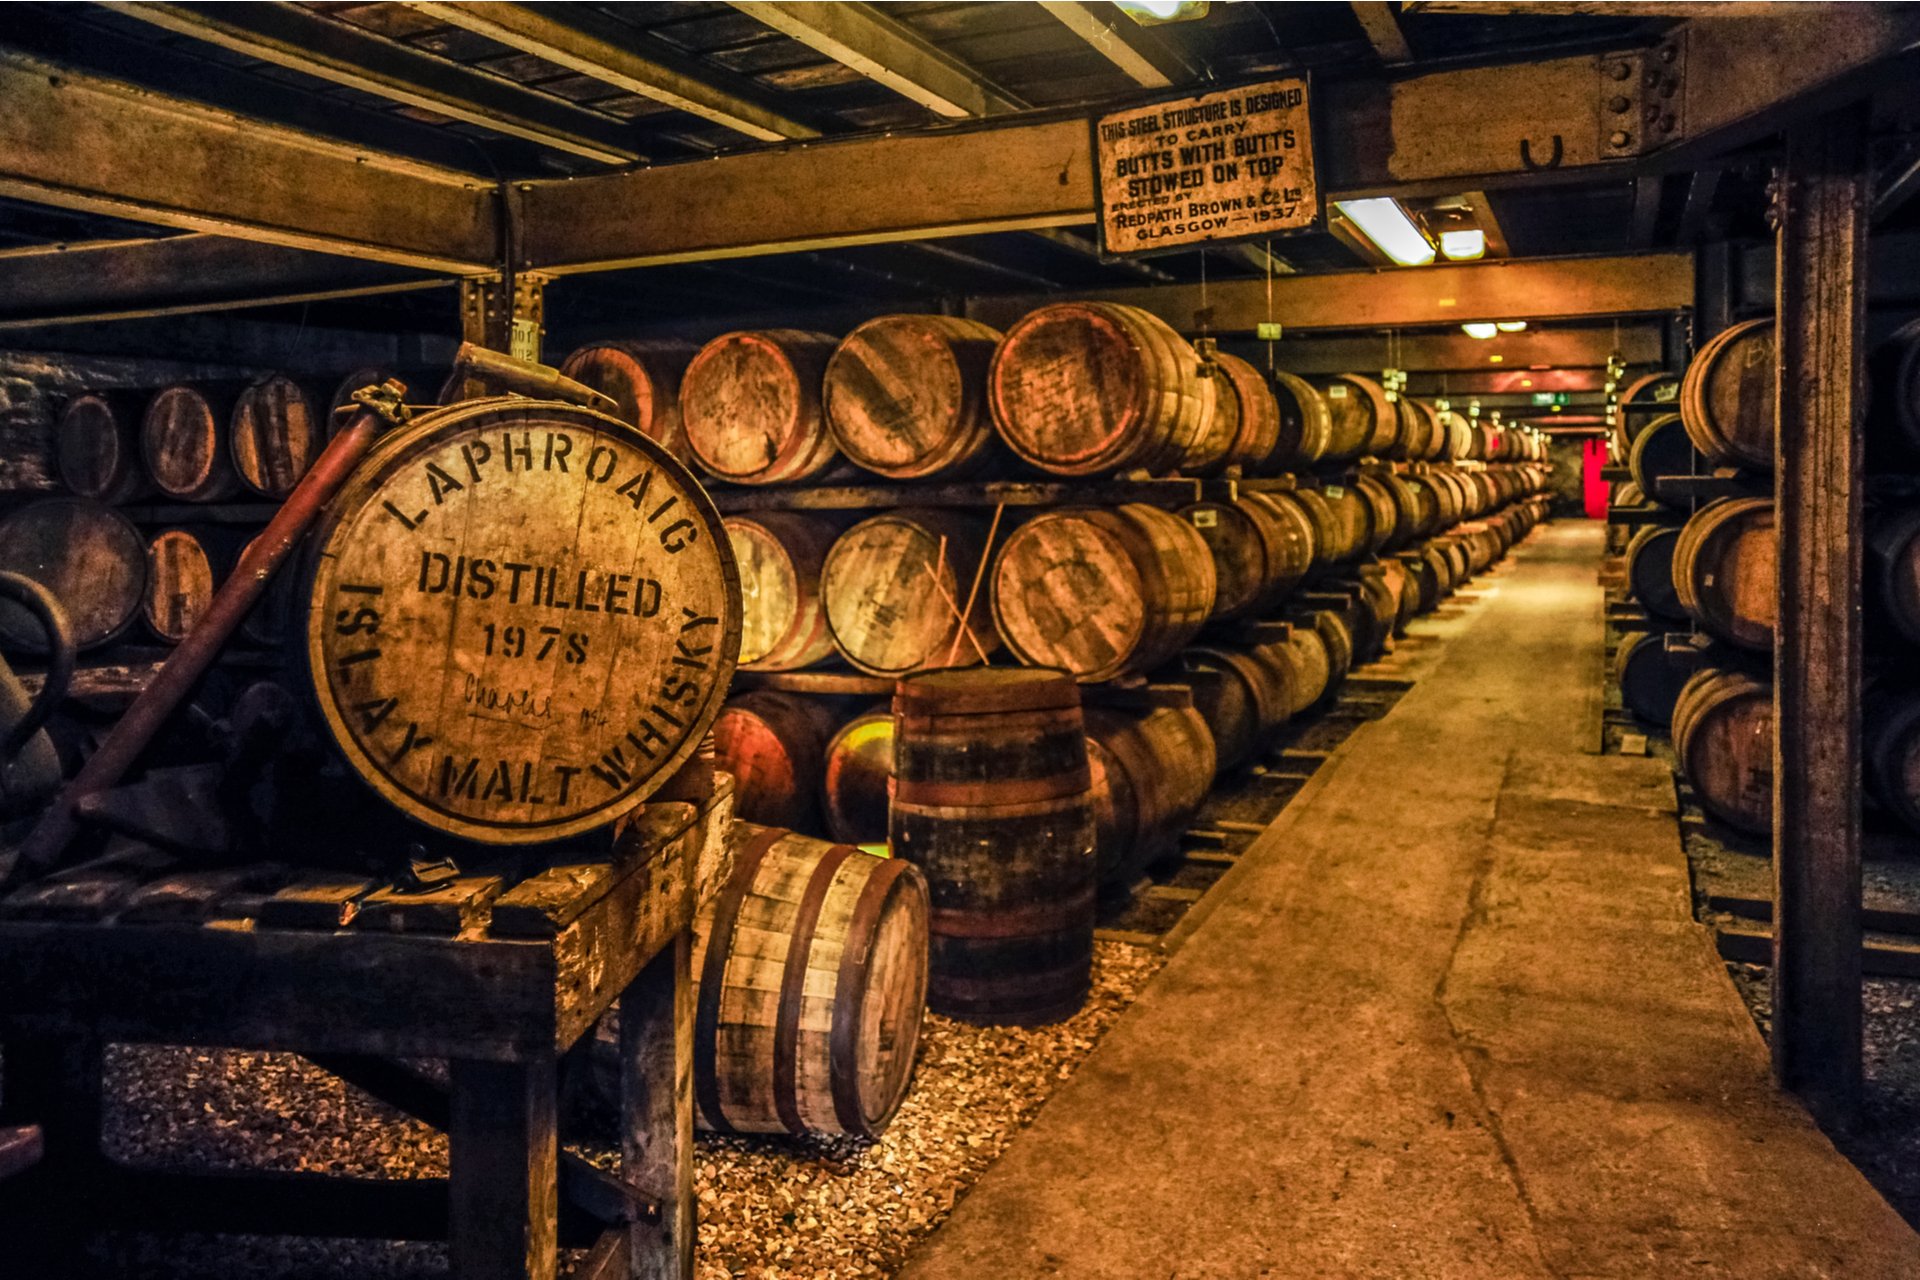 Whisky maturing in barrels at the famed Laphroaig Distillery, Scotland